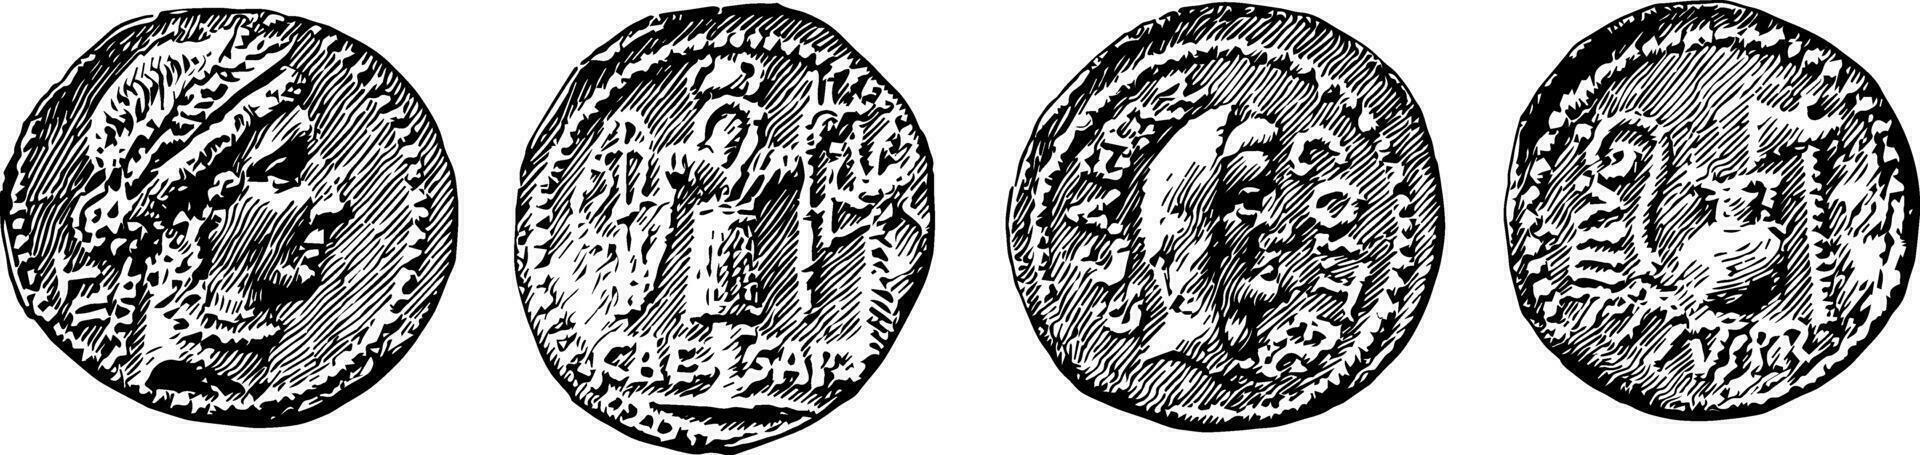 moedas César vintage ilustração. vetor